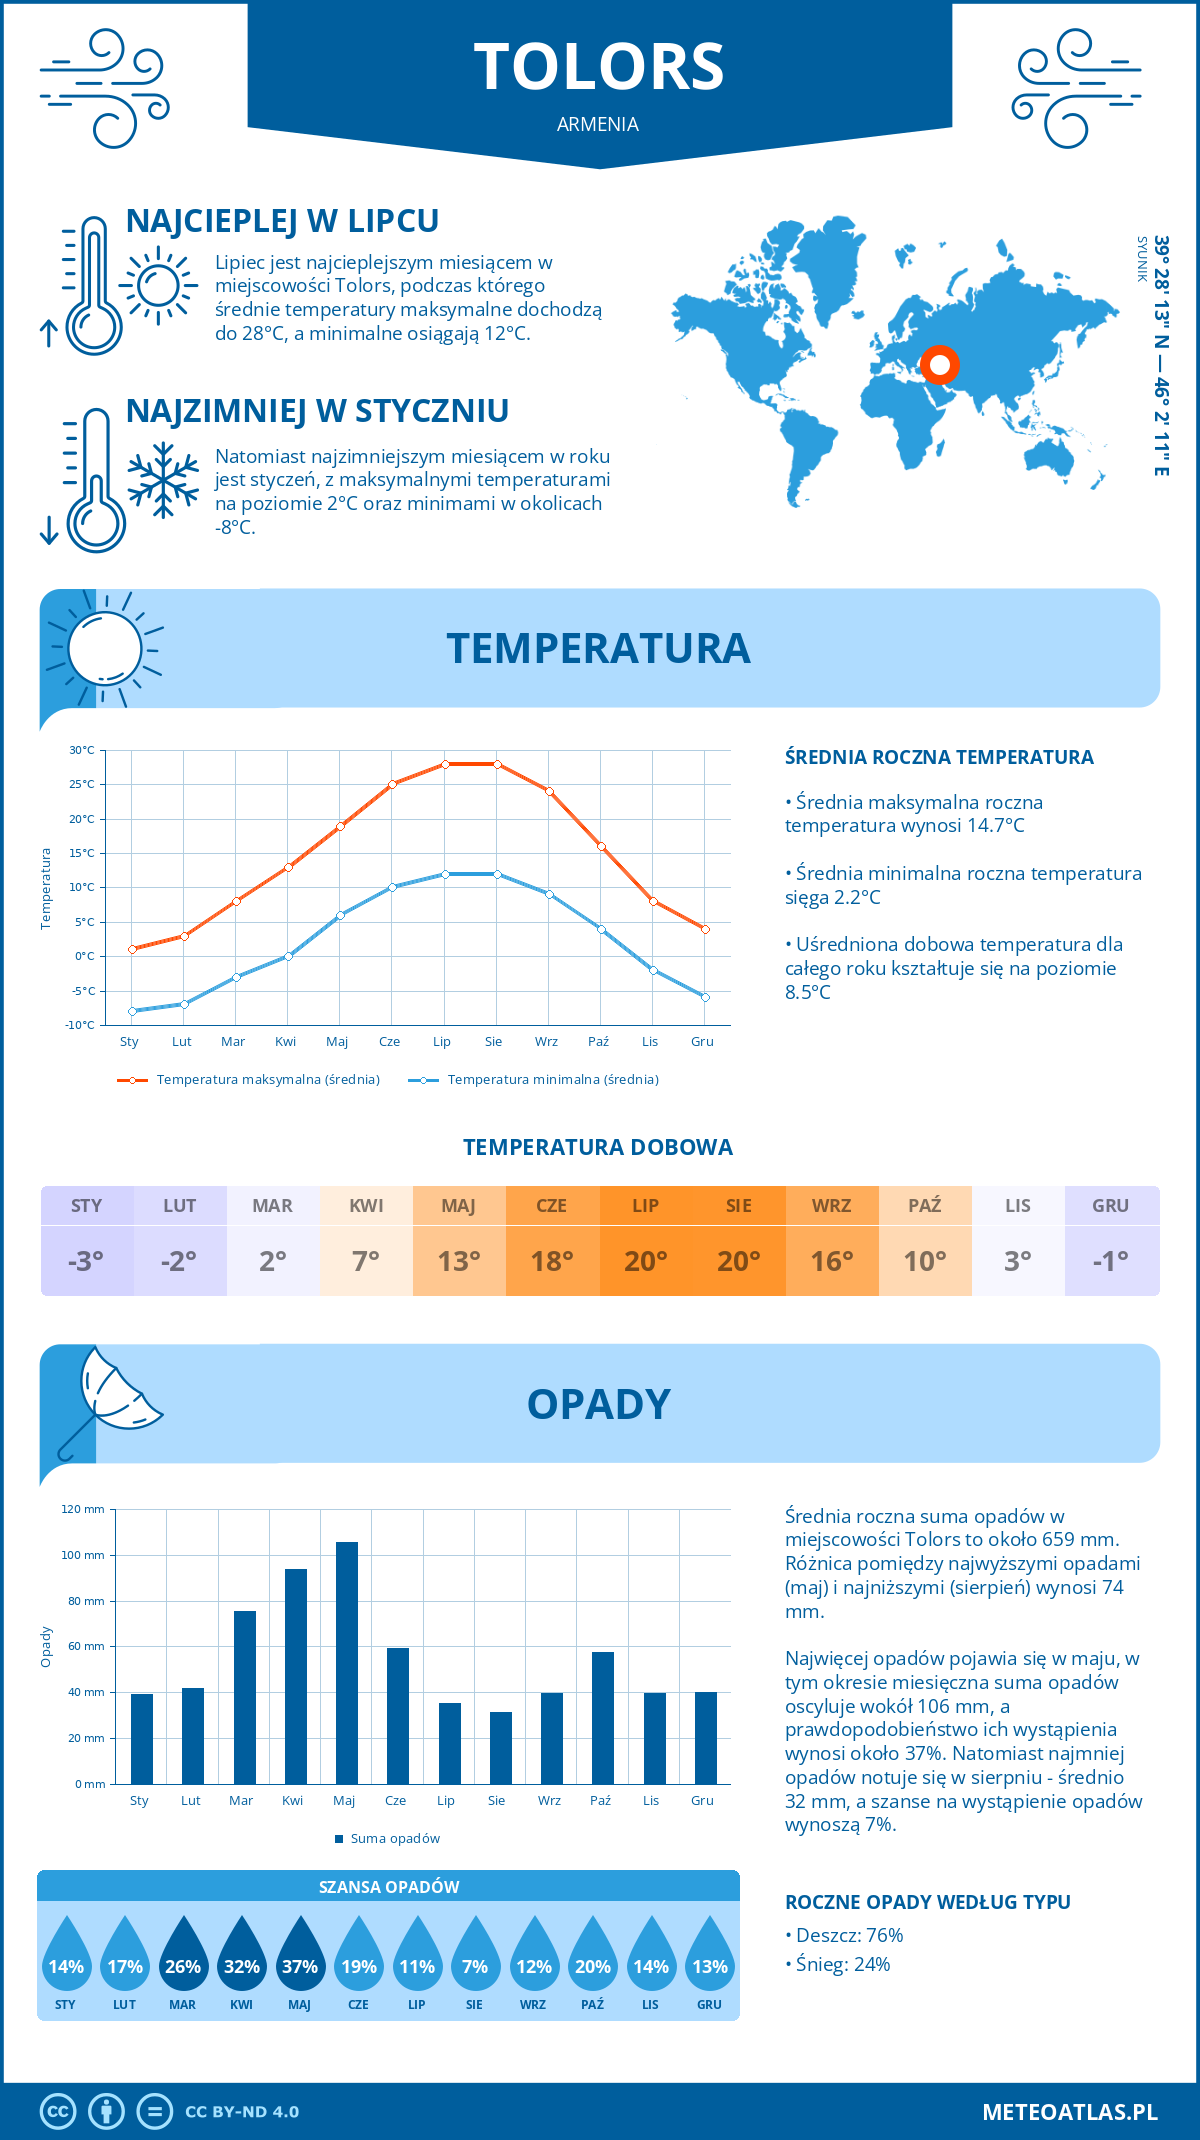 Pogoda Tolors (Armenia). Temperatura oraz opady.